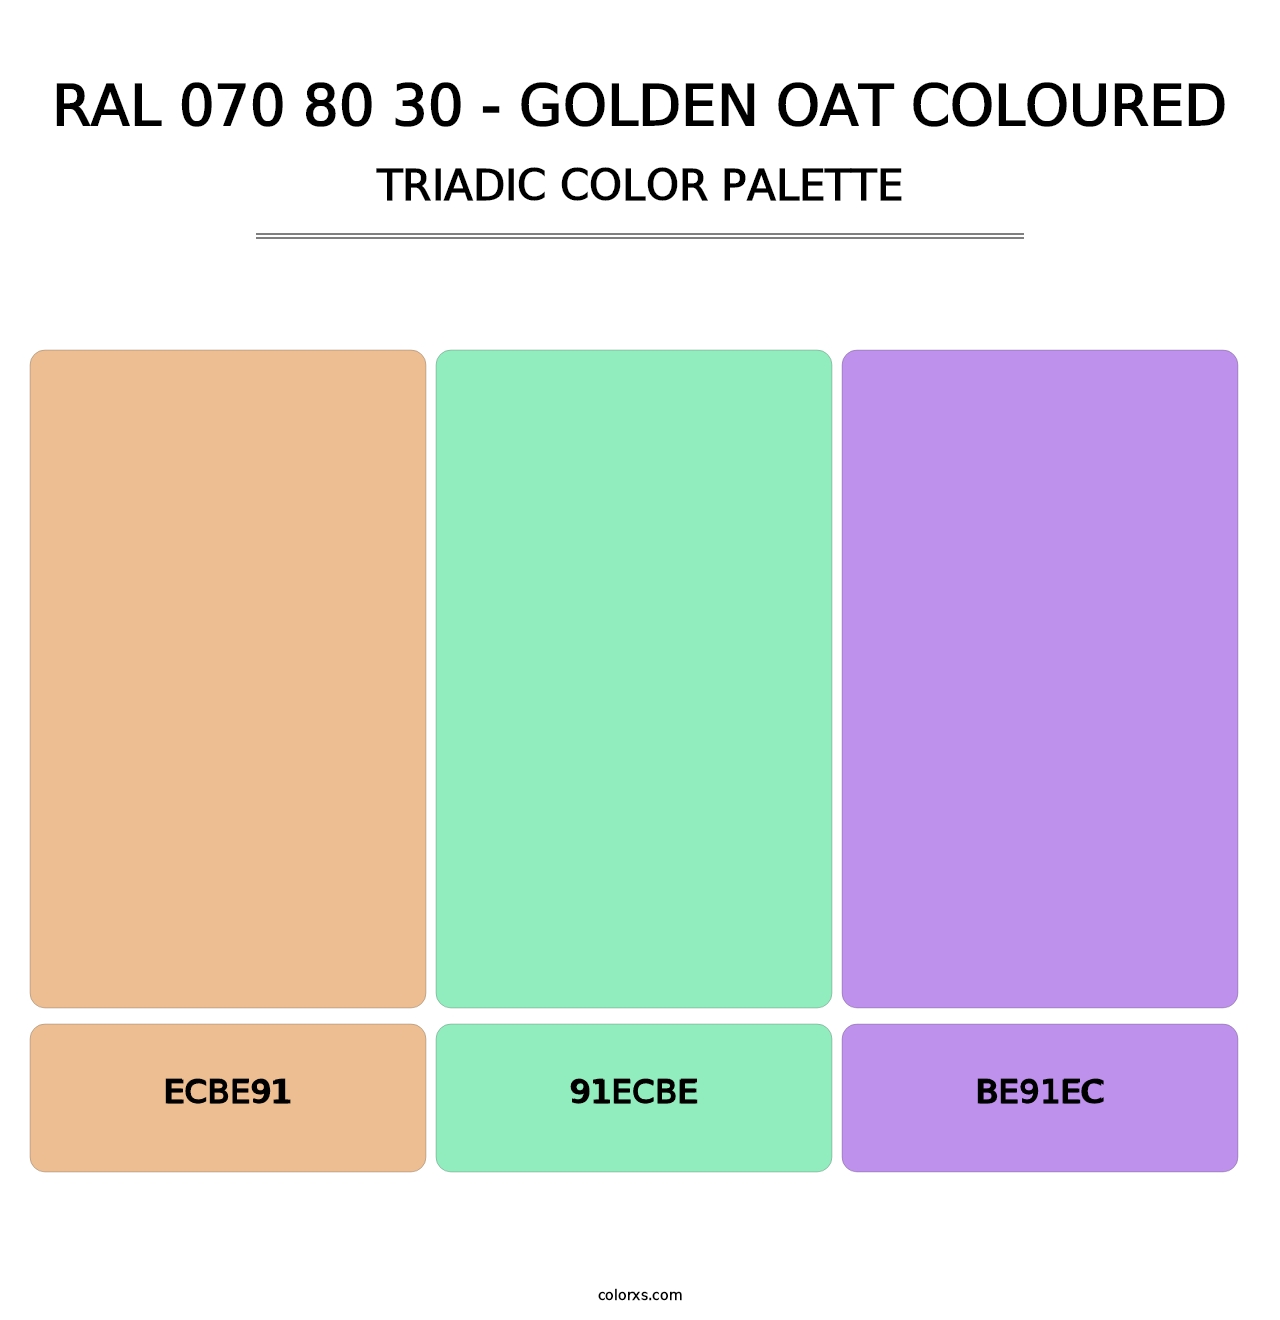 RAL 070 80 30 - Golden Oat Coloured - Triadic Color Palette